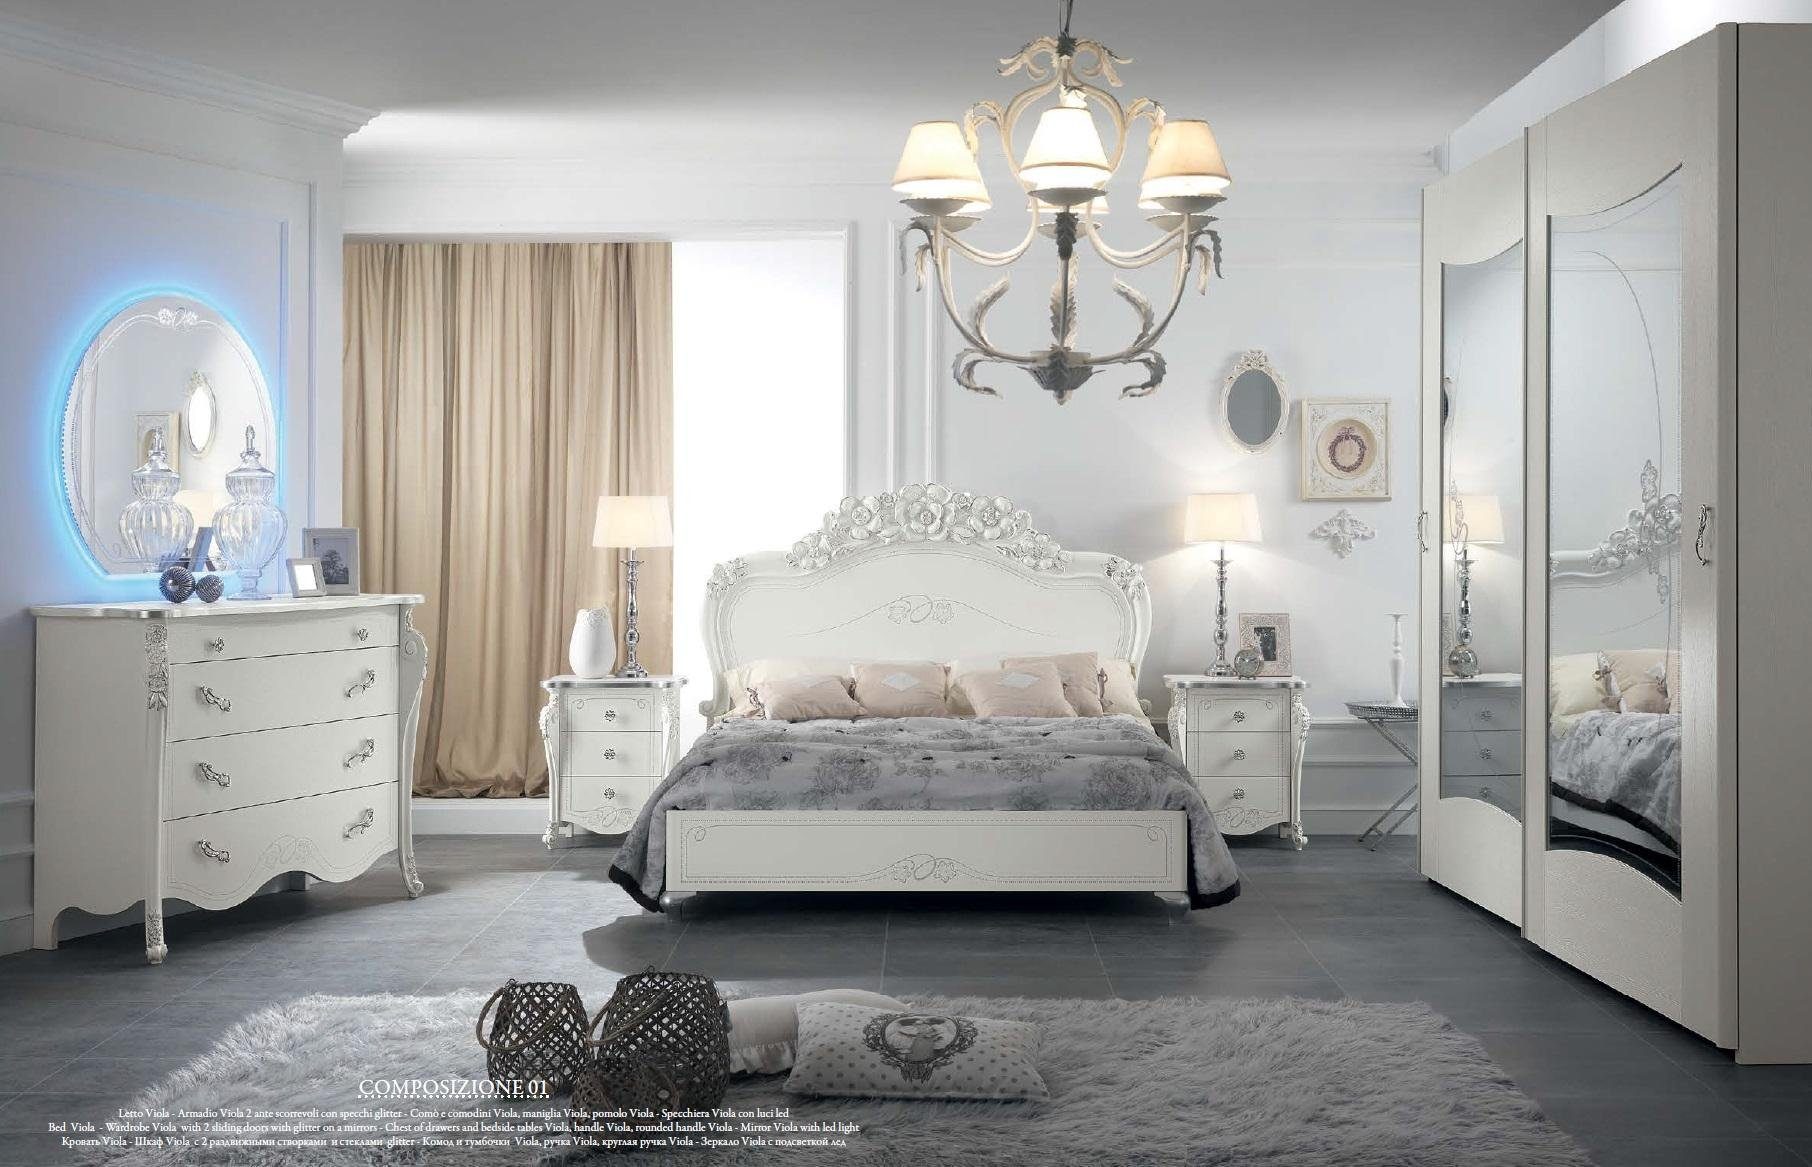 JVmoebel Bett Bett Betten Doppelbett Holz Luxus Möbel Design Klassische Hotel (Bett) | Bettgestelle